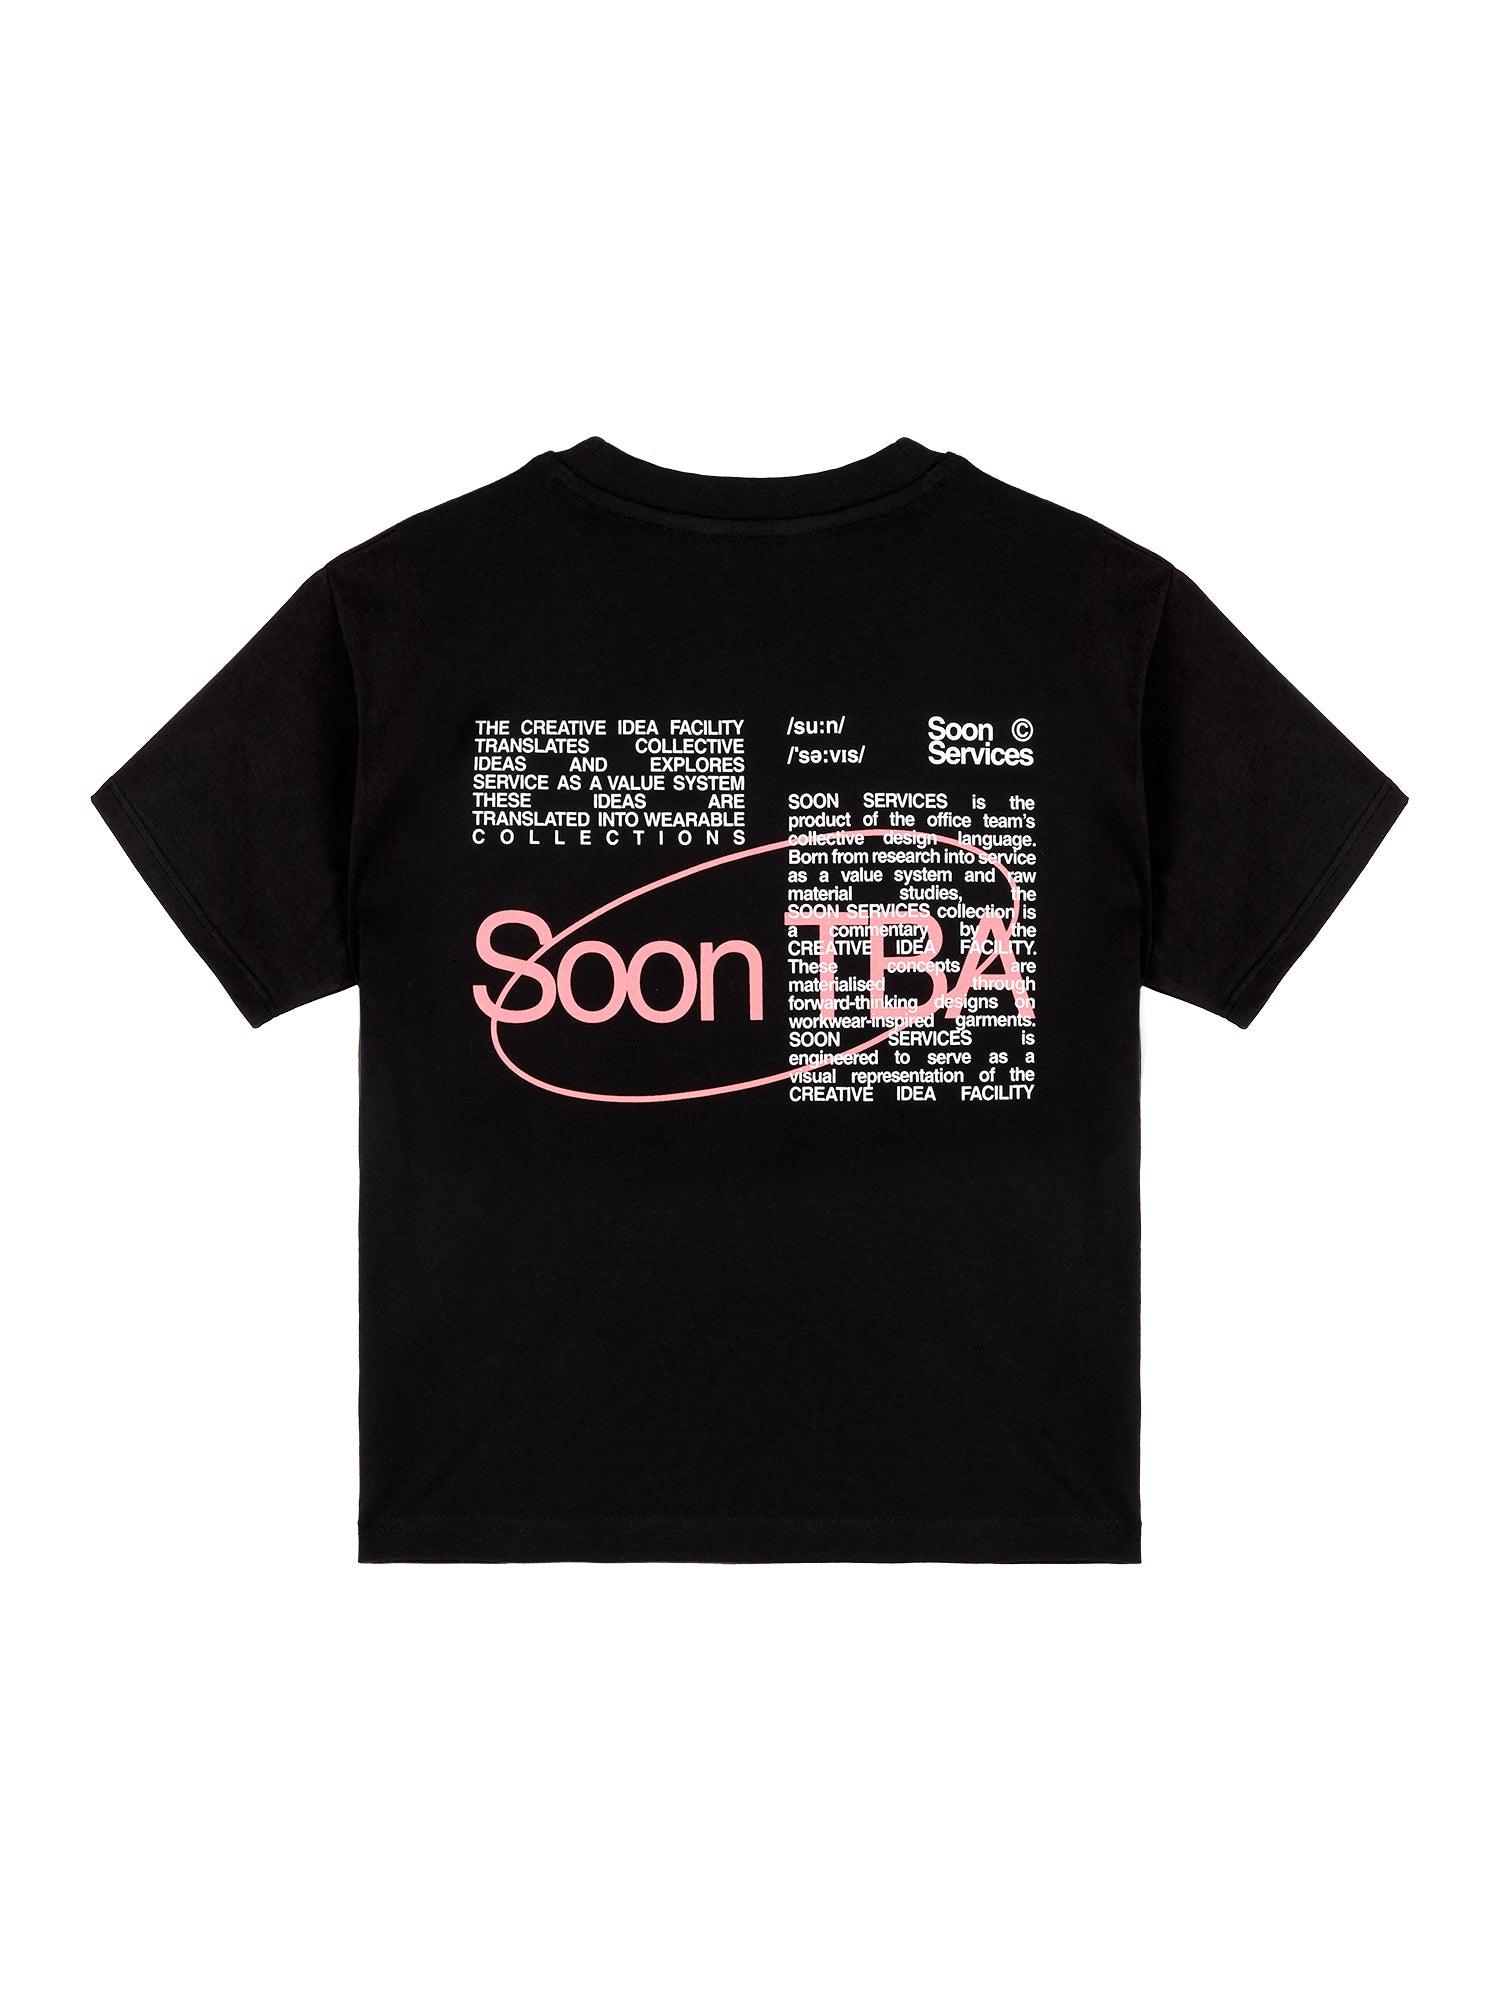 Soon TBA T-Shirt - SOON TO BE ANNOUNCED